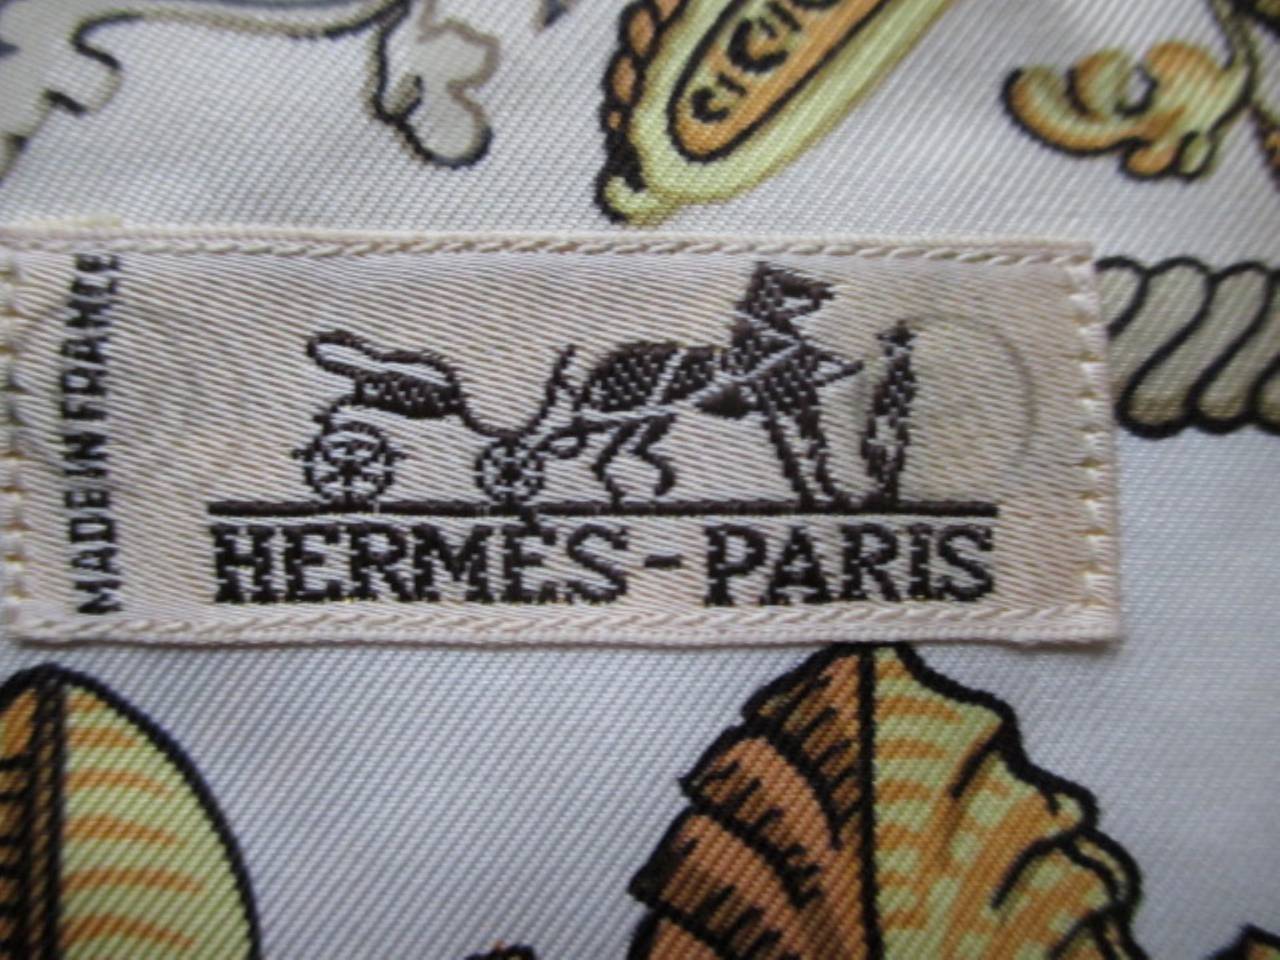 Very rare vintage Hermes silk men shirt with the sun king motive fabric designed by Francois de la Perriere.

Measurements
Length: 80 cm
chest: 90 cm
waist: 90 cm
sleeve: 59 cm
The size is 38 but can fit as 42 EU